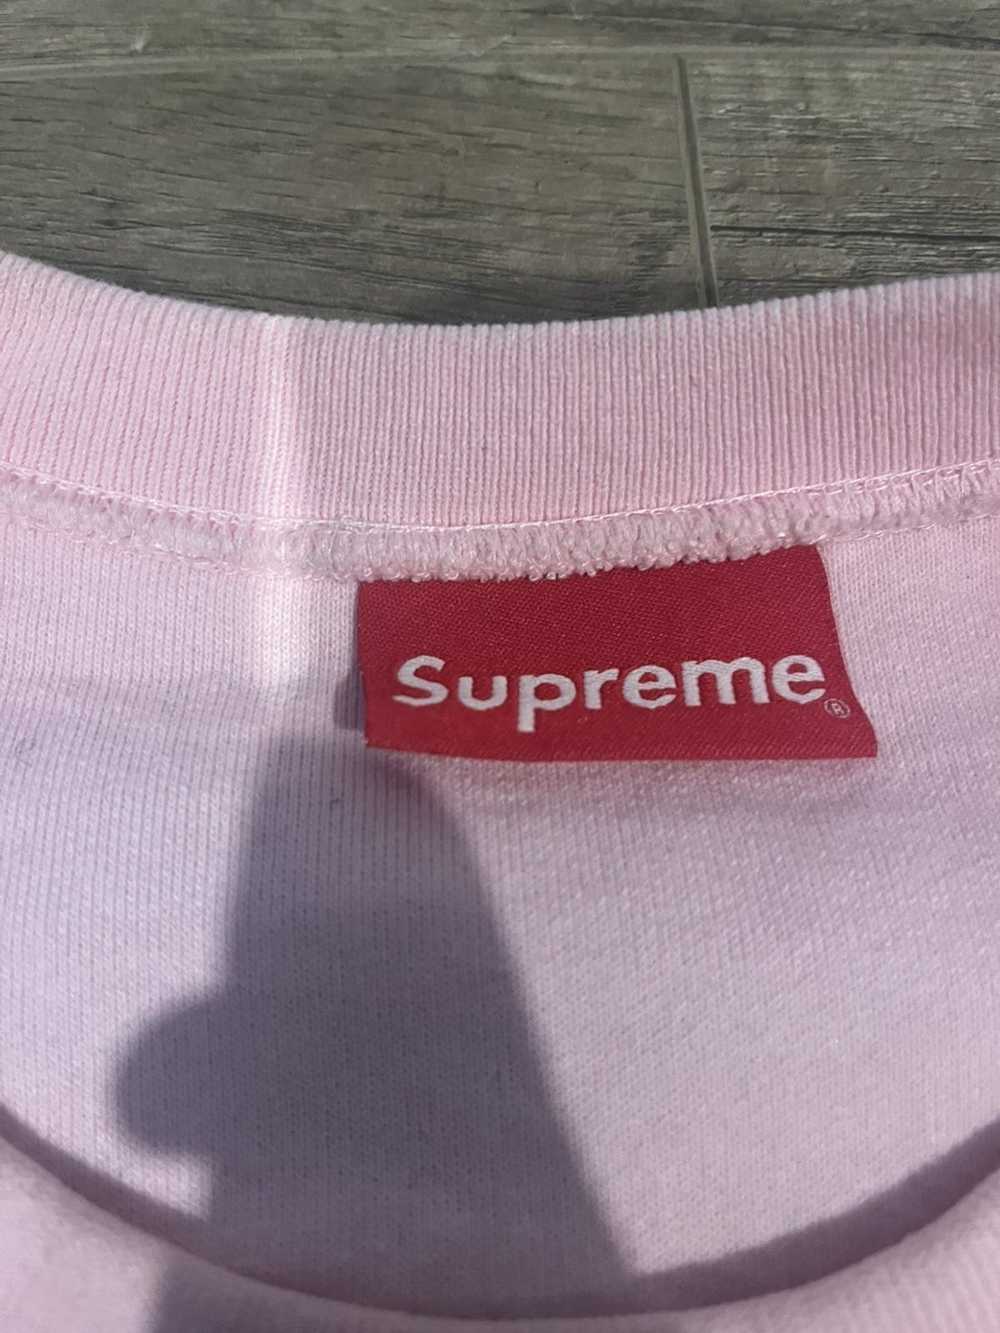 Supreme Supreme Sweater - image 2